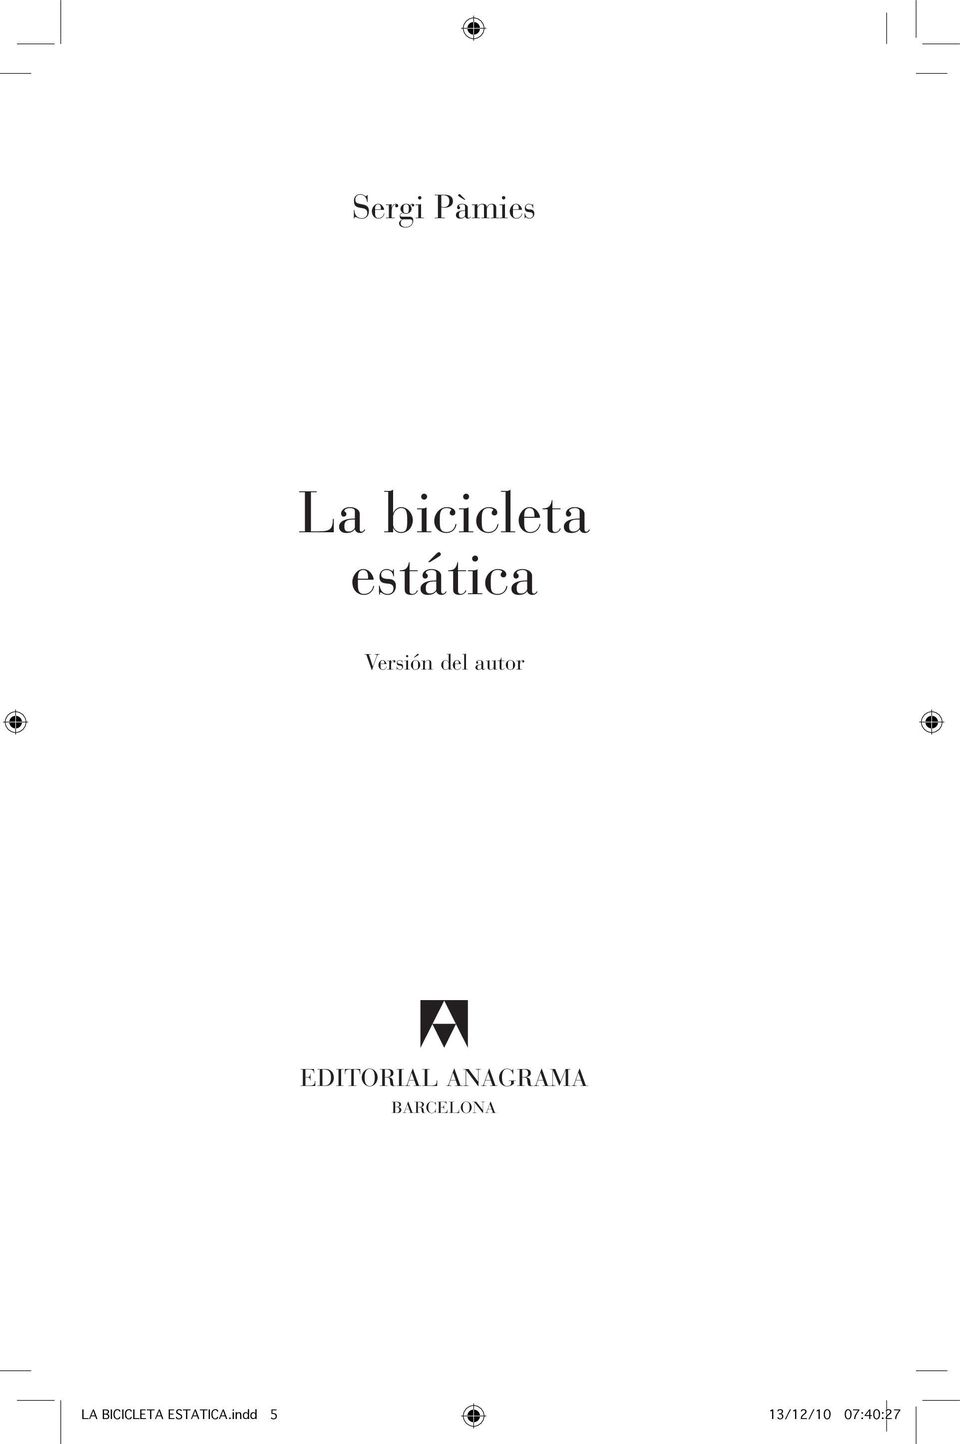 EDITORIAL ANAGRAMA BARCELONA LA